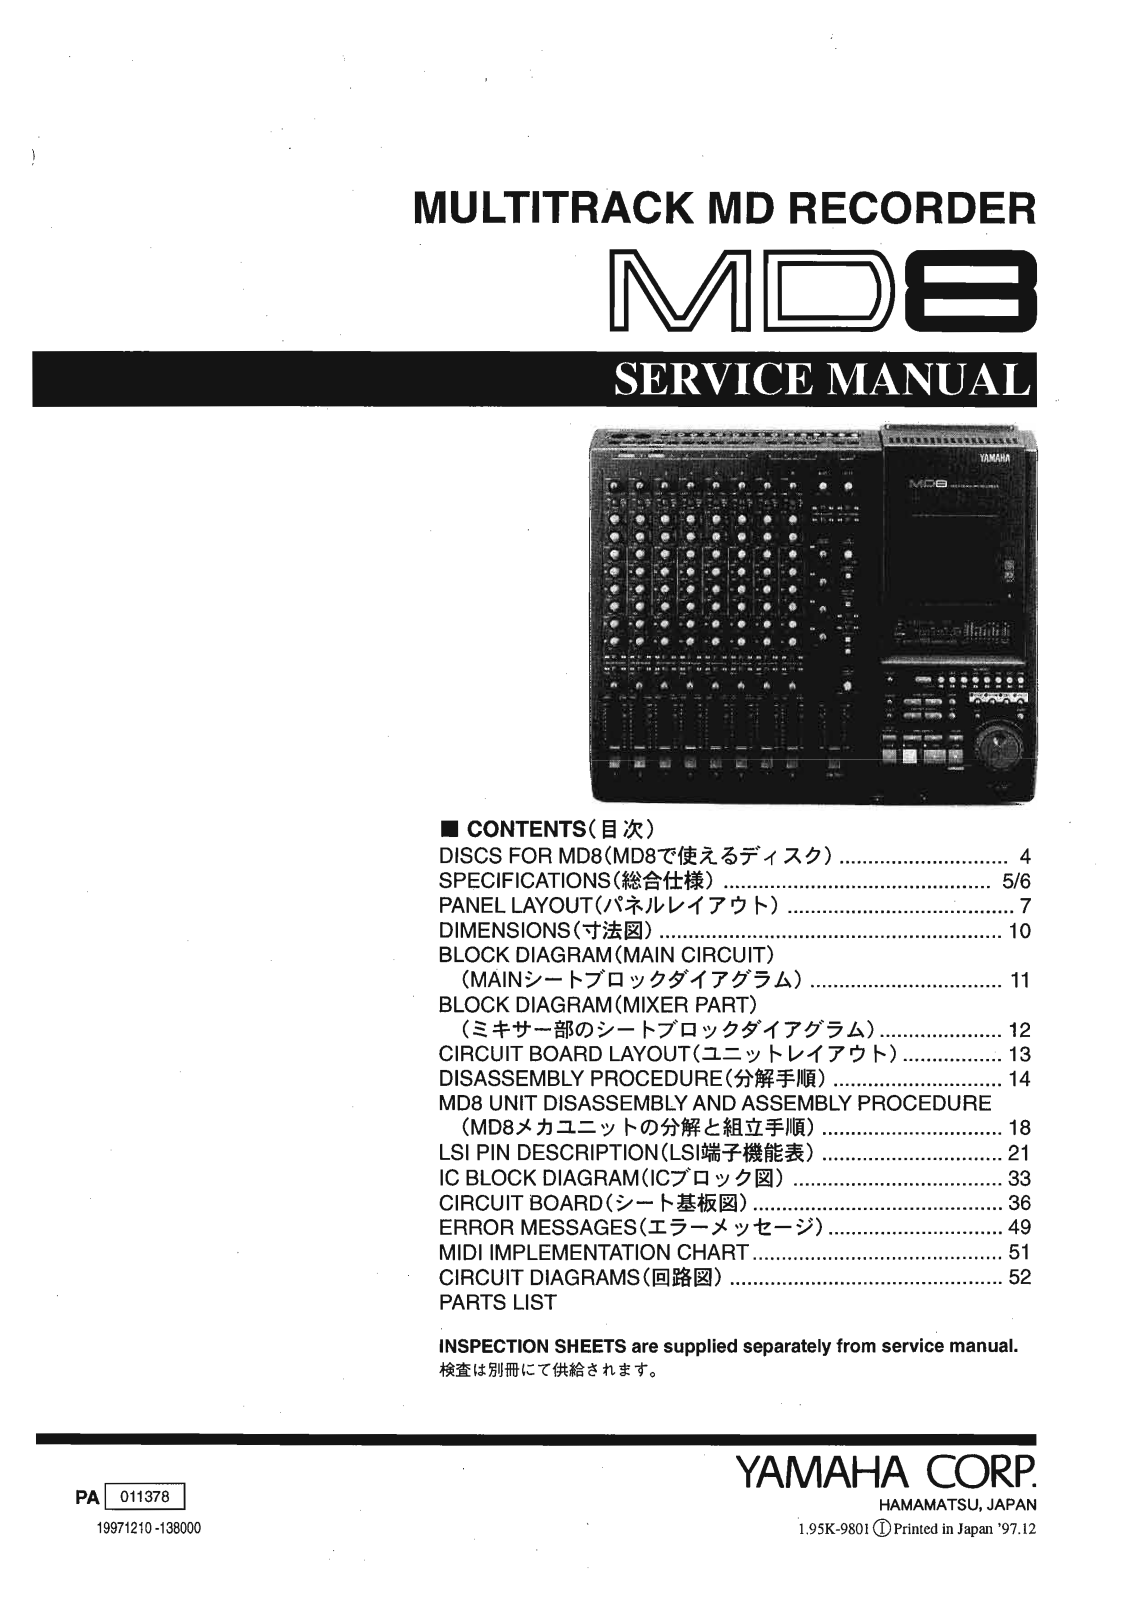 Yamaha MD-8 Service Manual